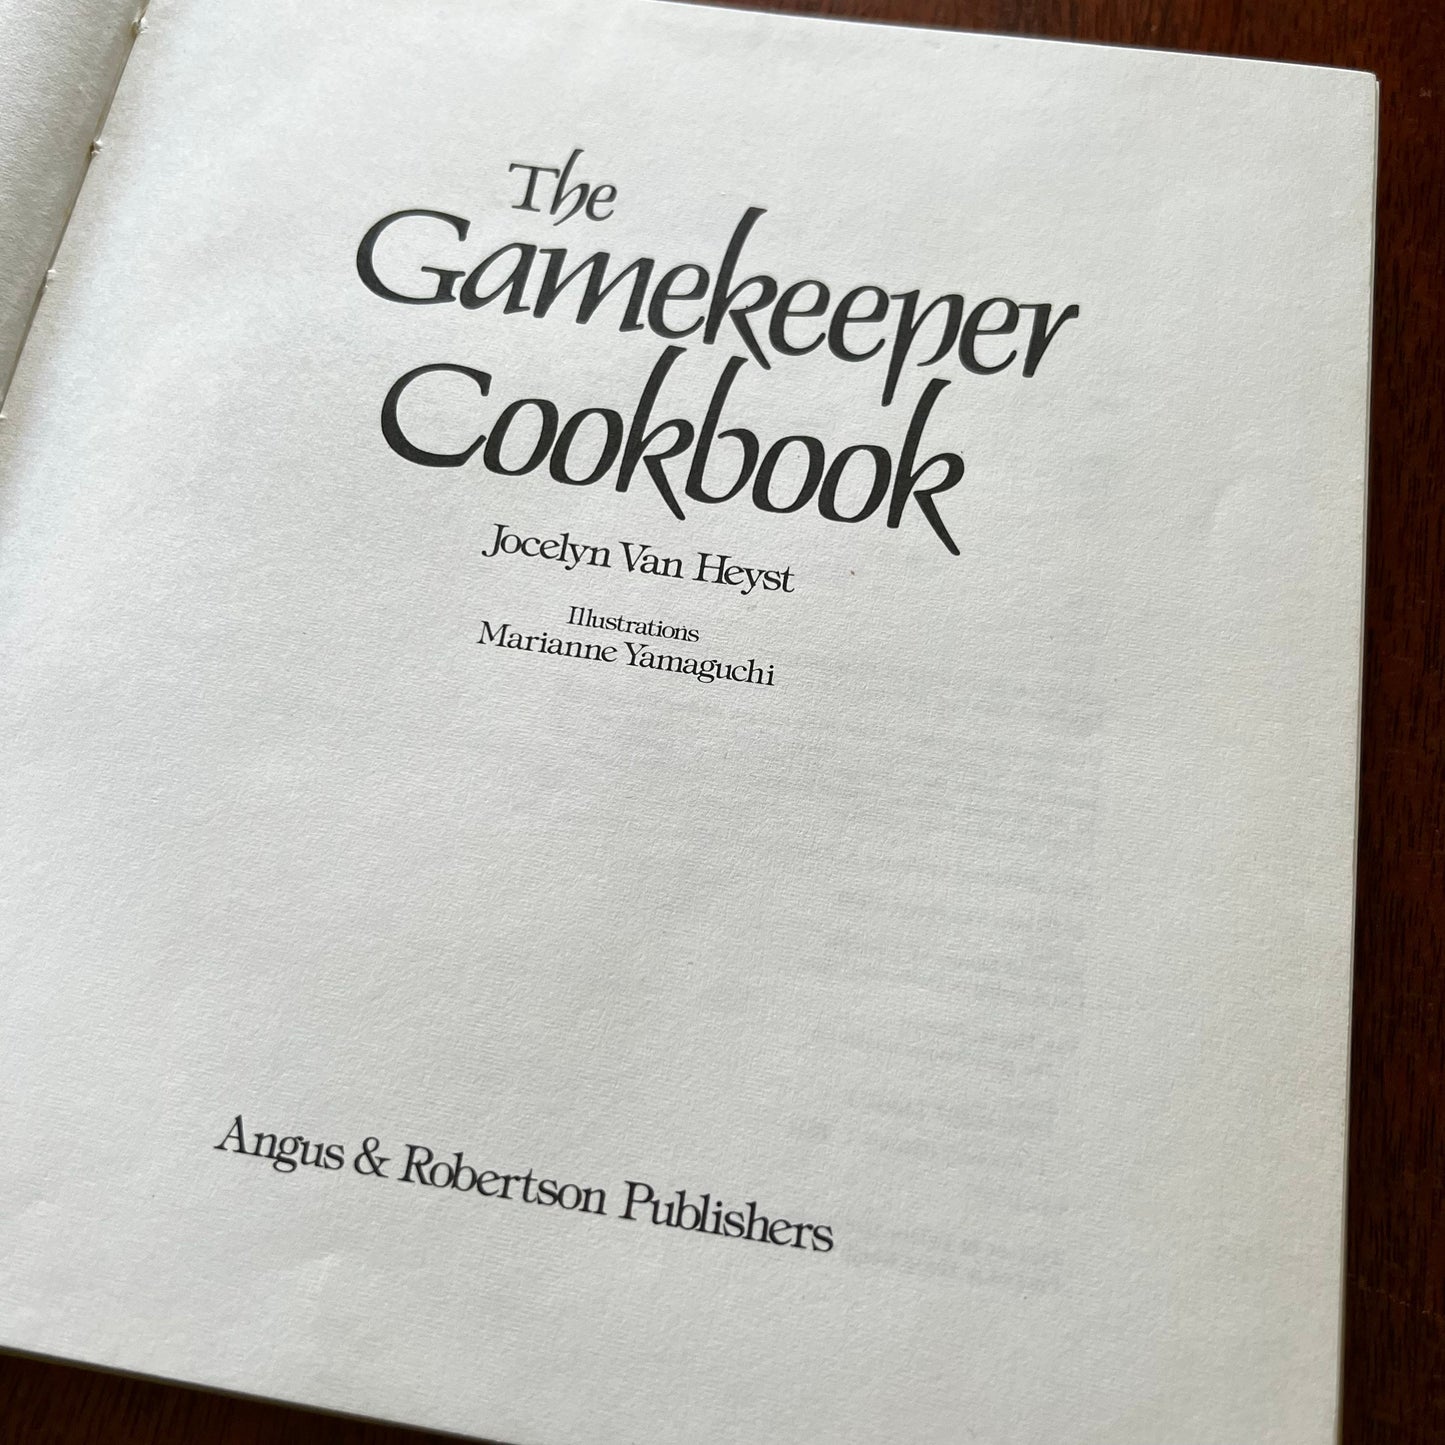 The Australian Gamekeeper Cookbook by Jocelyn Van Heyst